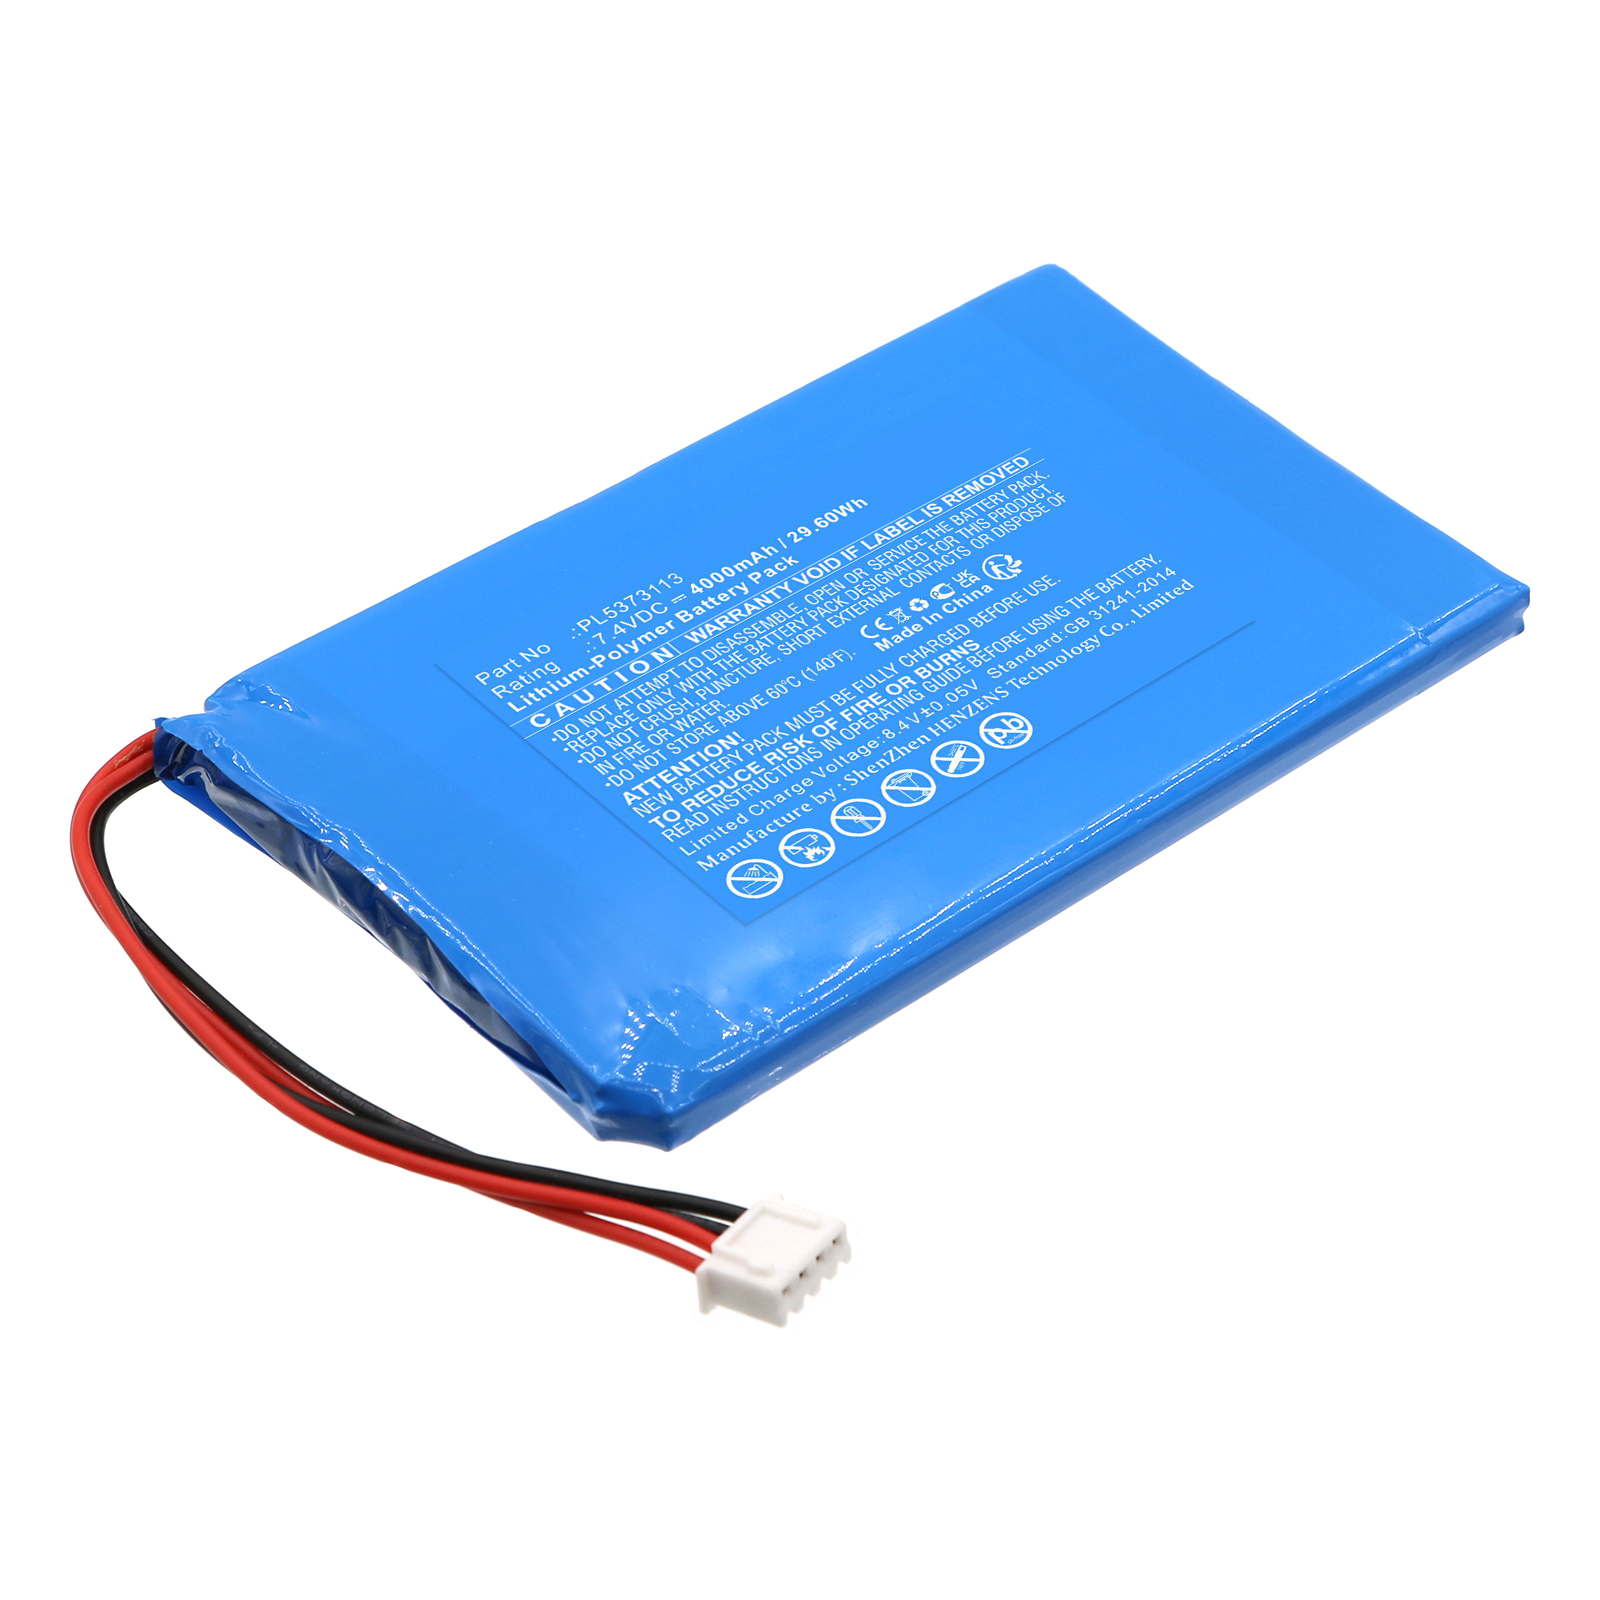 Synergy Digital Equipment Battery, Compatible with Securitytronix PL5373113 Equipment Battery (Li-Pol, 7.4V, 4000mAh)